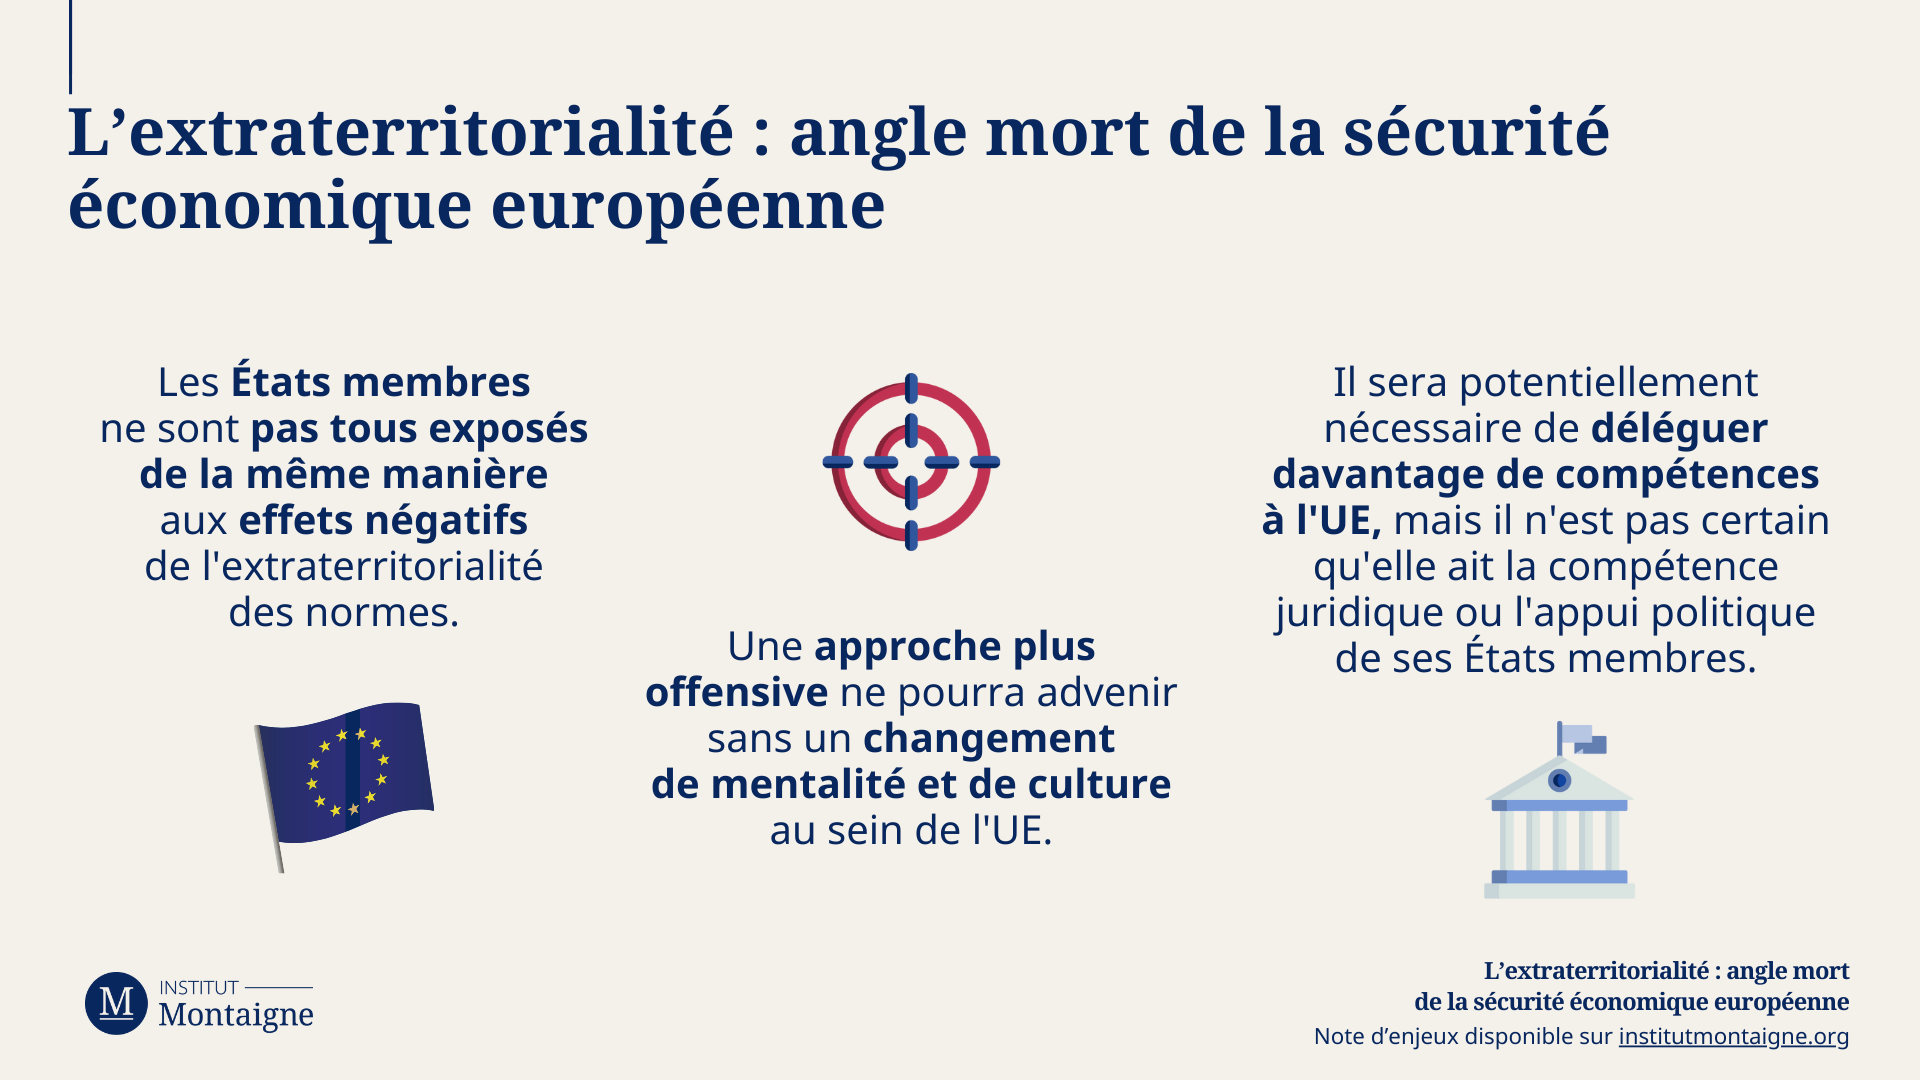 infographie-lextraterritorialite-angle-mort-de-la-securite-economique-europeenne.png